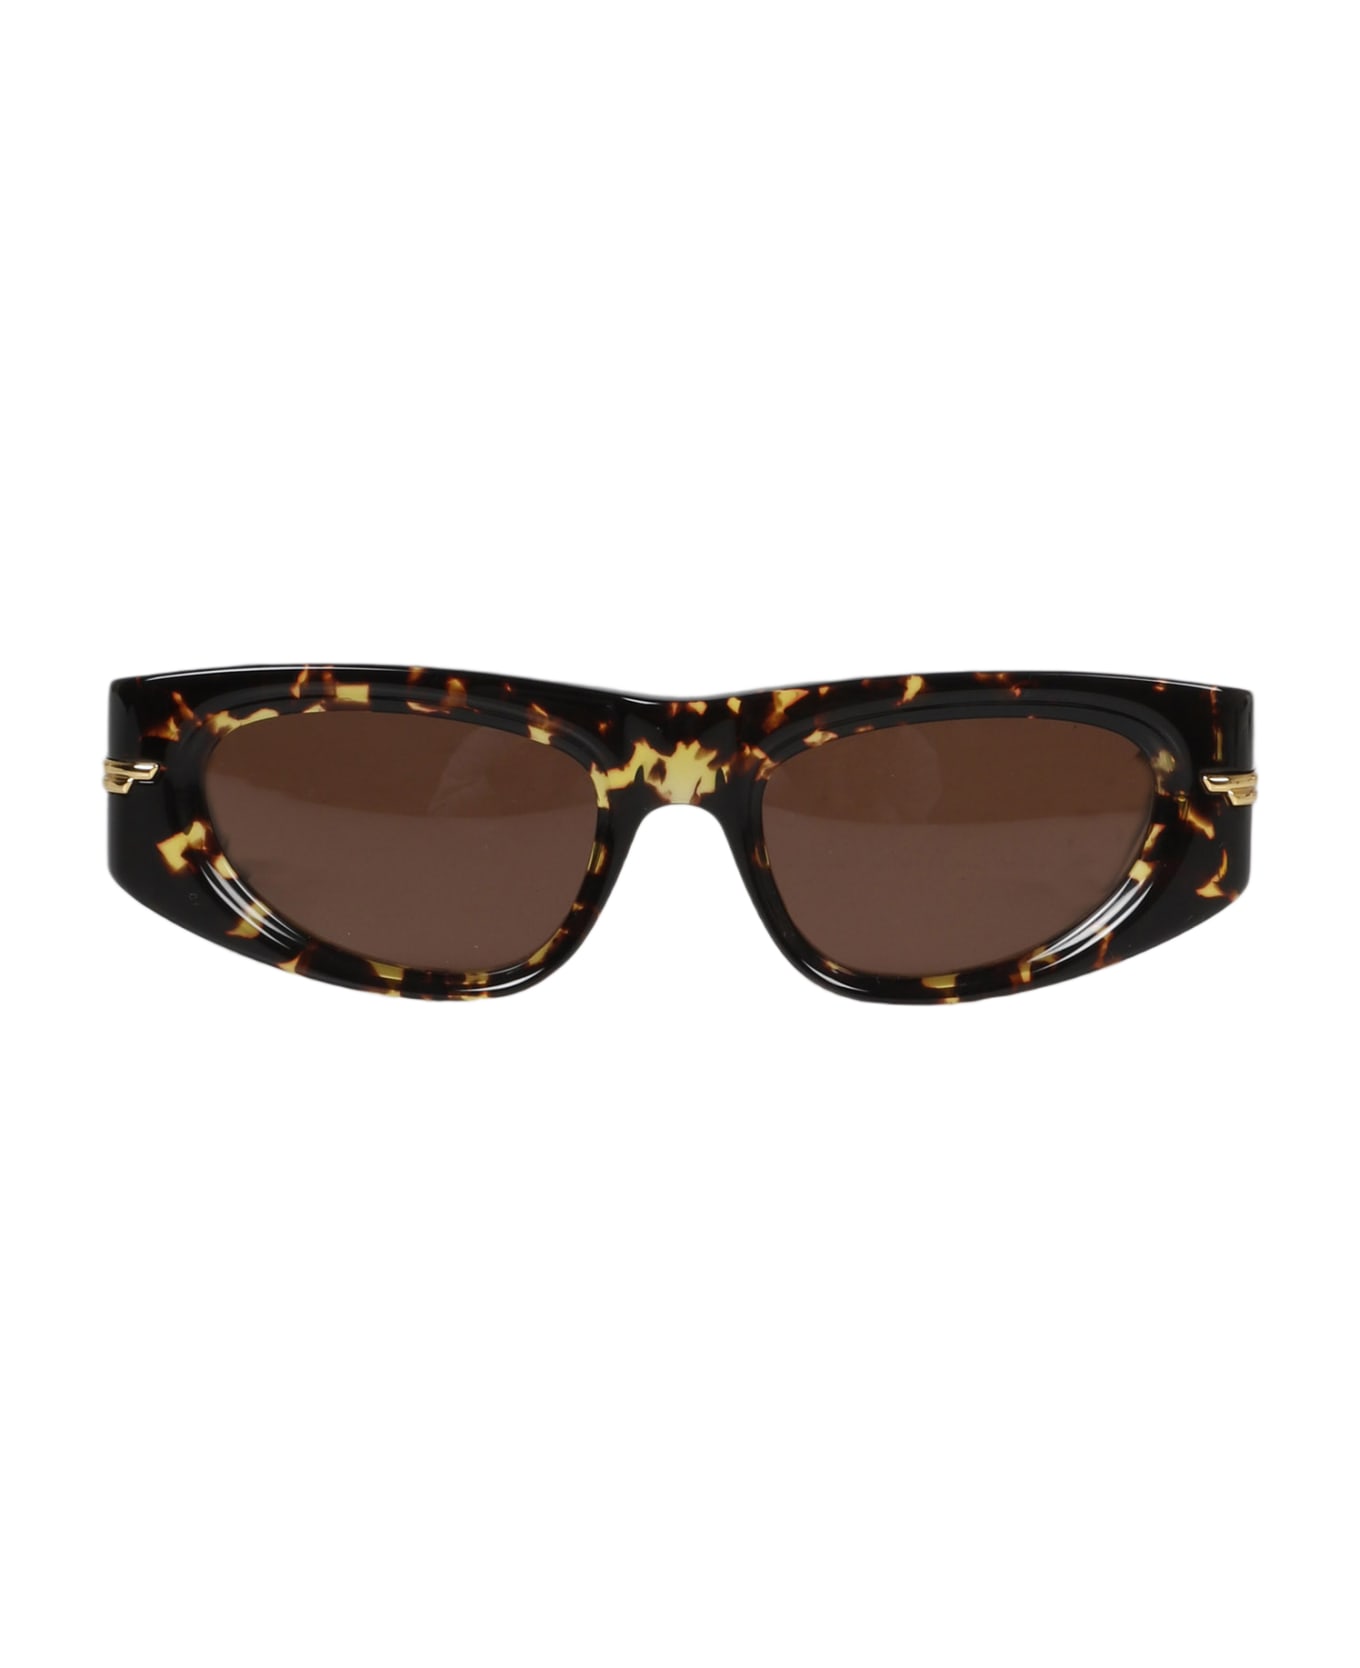 Bottega Veneta Eyewear Mitre Sunglasses - Brown サングラス